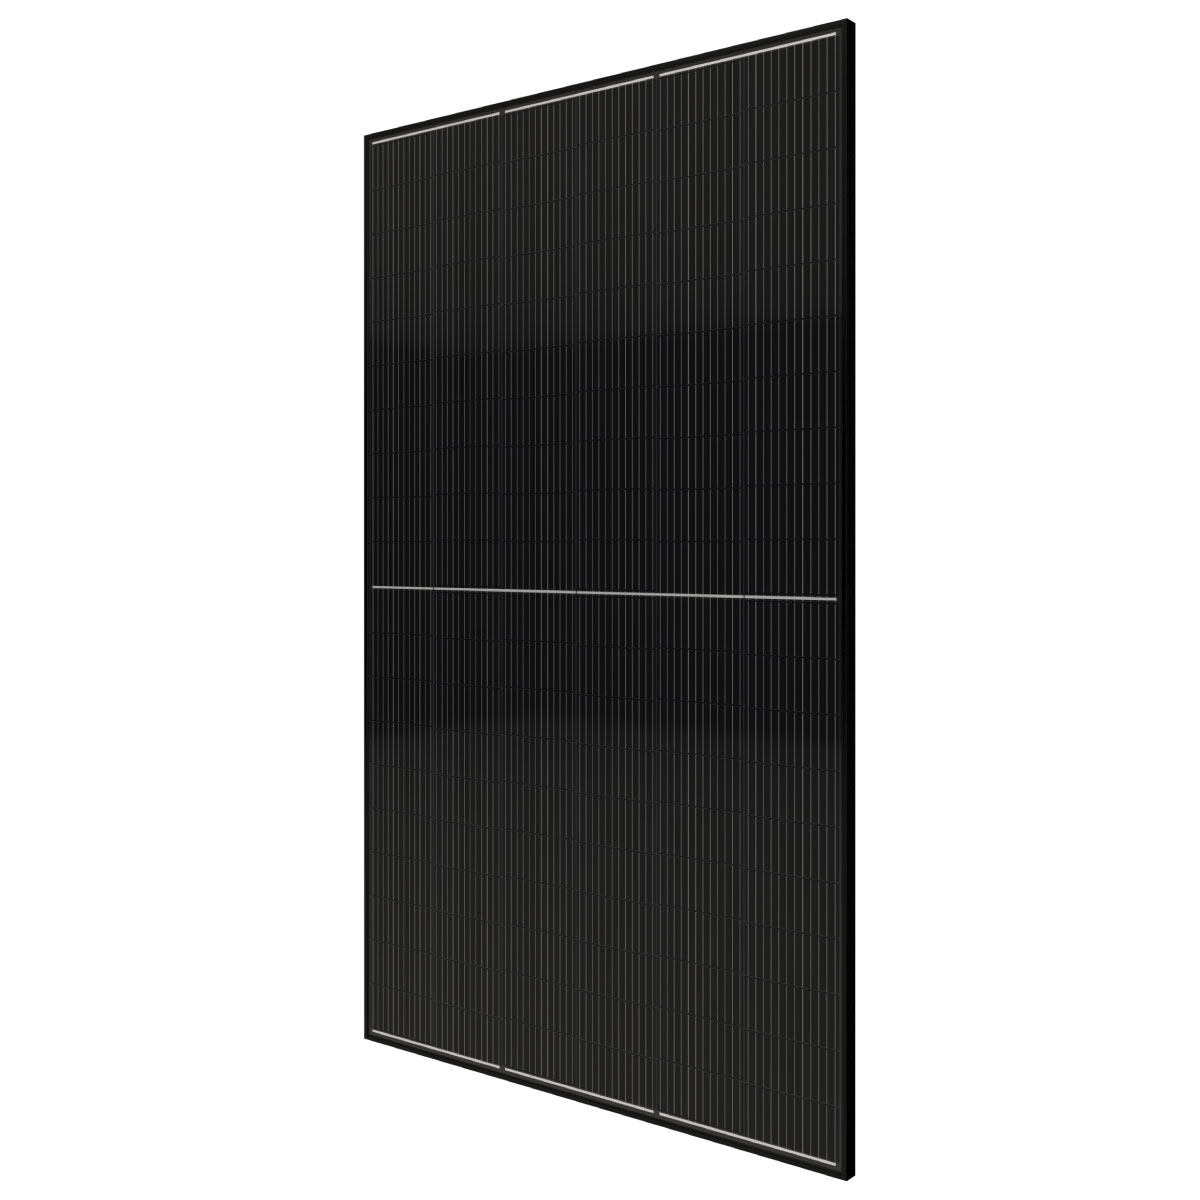 TommaTech 590Wp 120PM M12 Dark Series Solar Panel